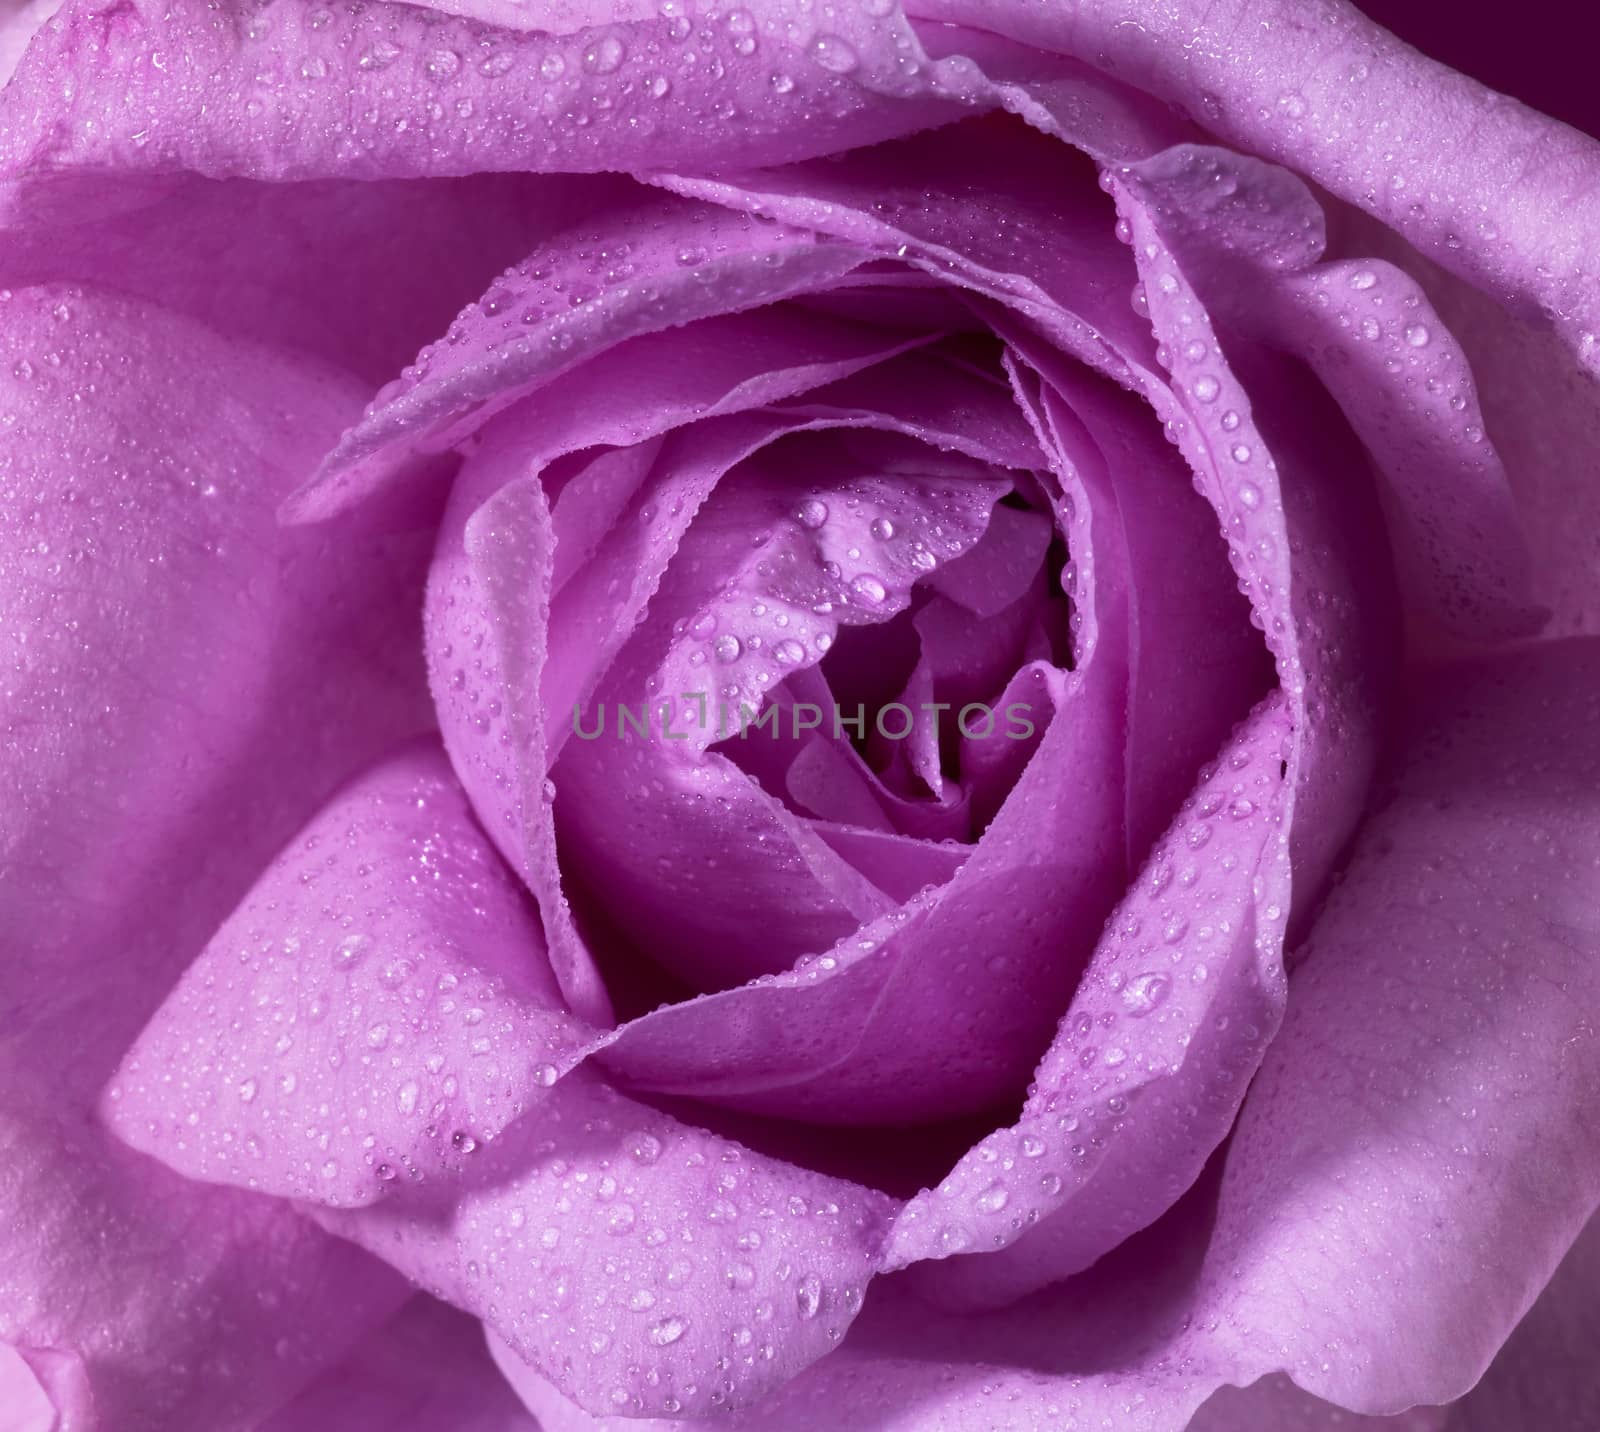 detail of a wet pink rose flower